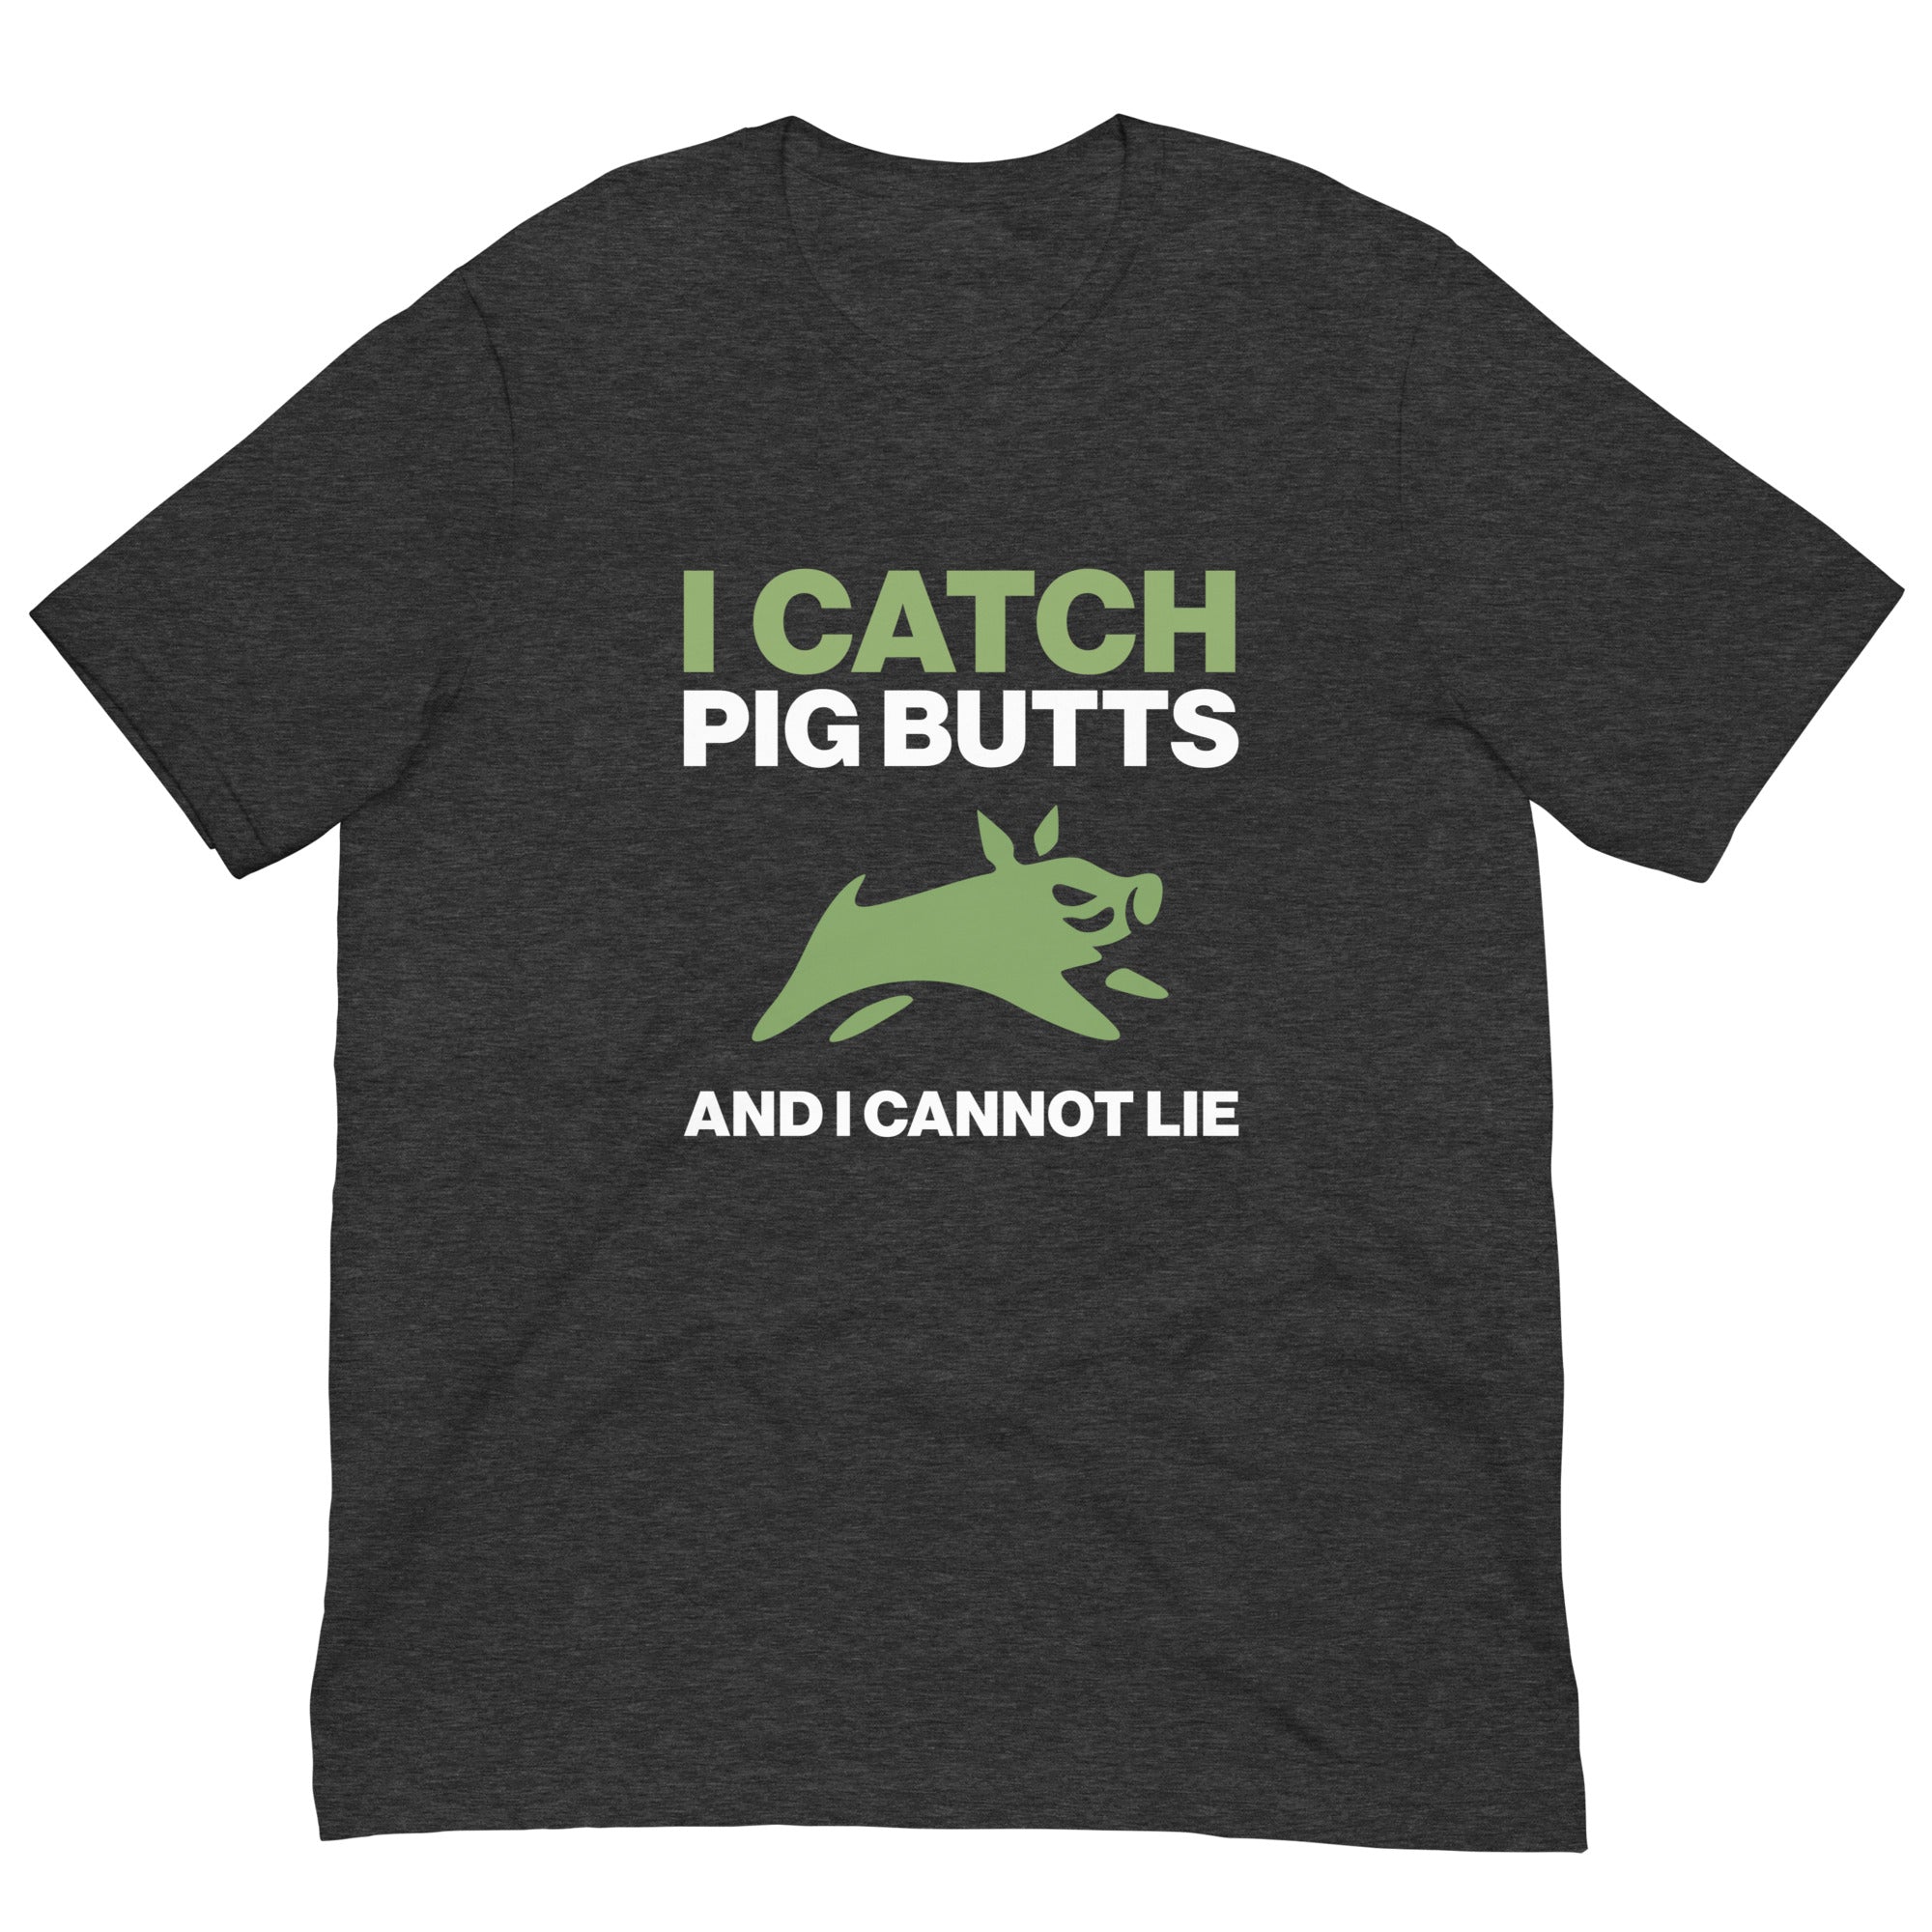 I Catch Pig Butts - Short-Sleeve Unisex T-Shirt